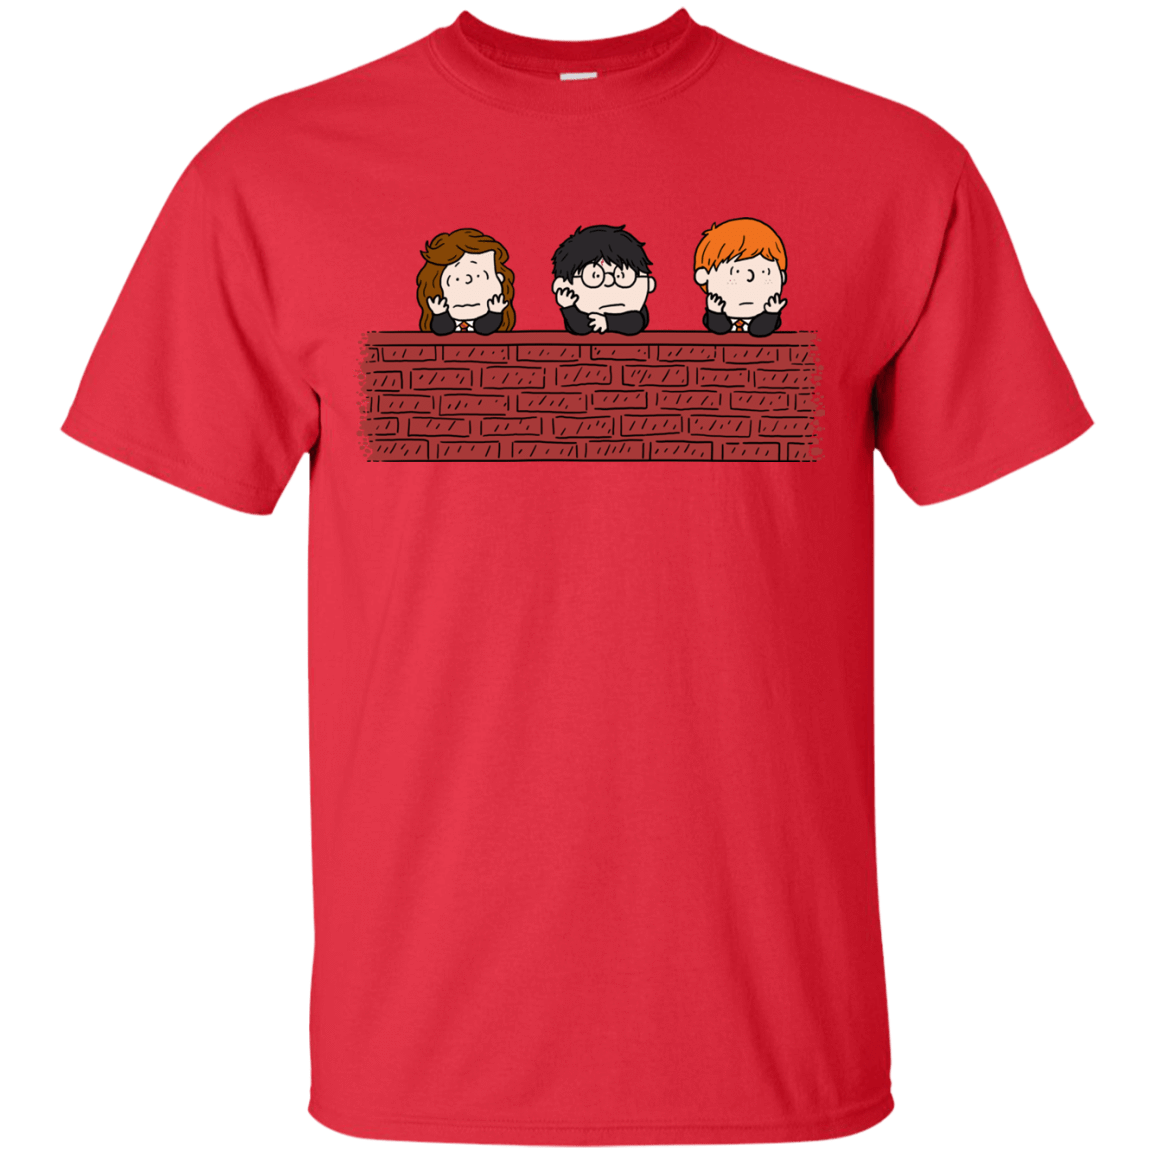 T-Shirts Red / S Brick Wall T-Shirt